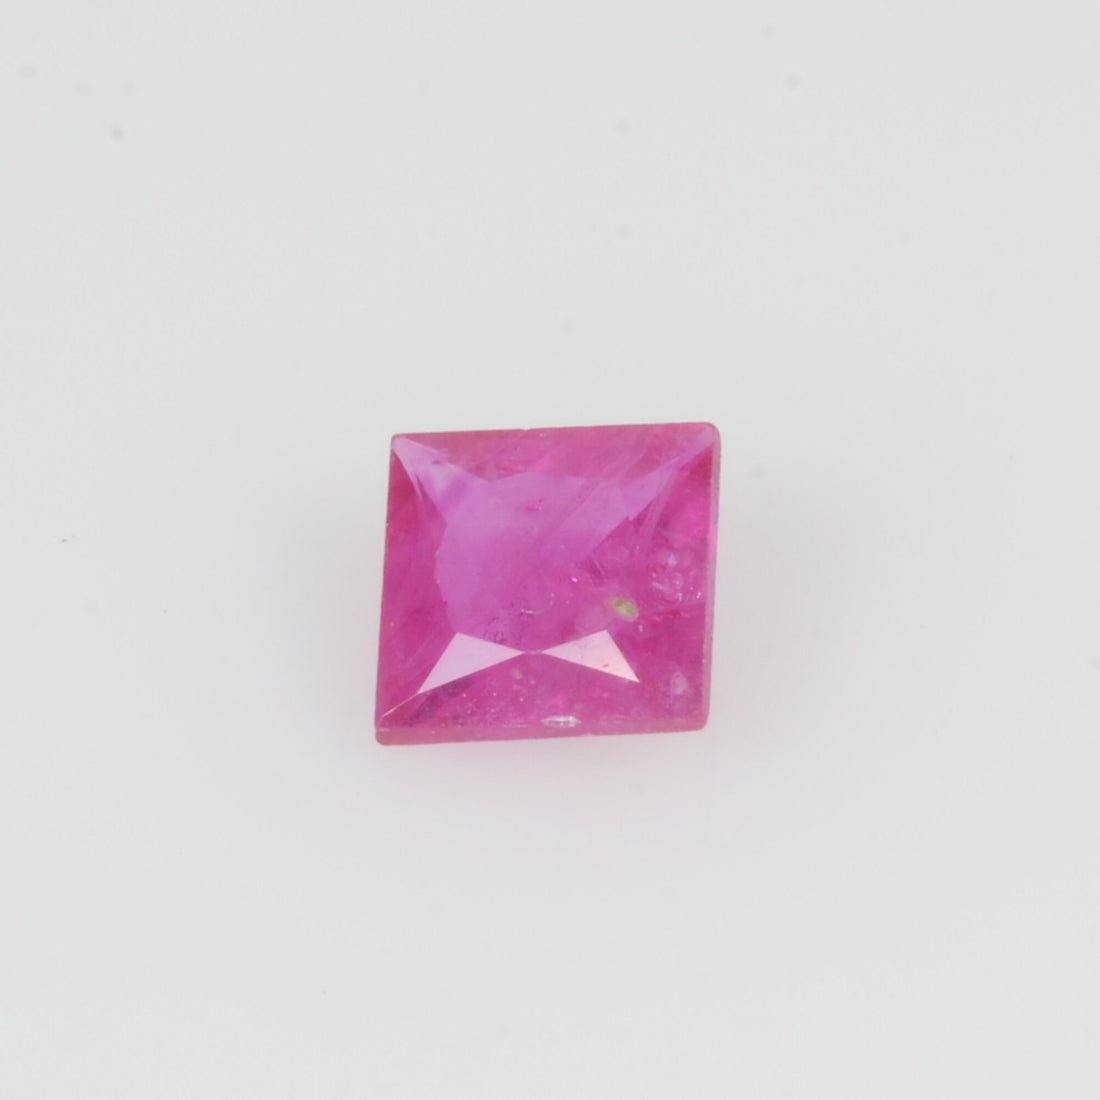 2-3 mm Natural Pink Sapphire Loose Gemstone Square Cut